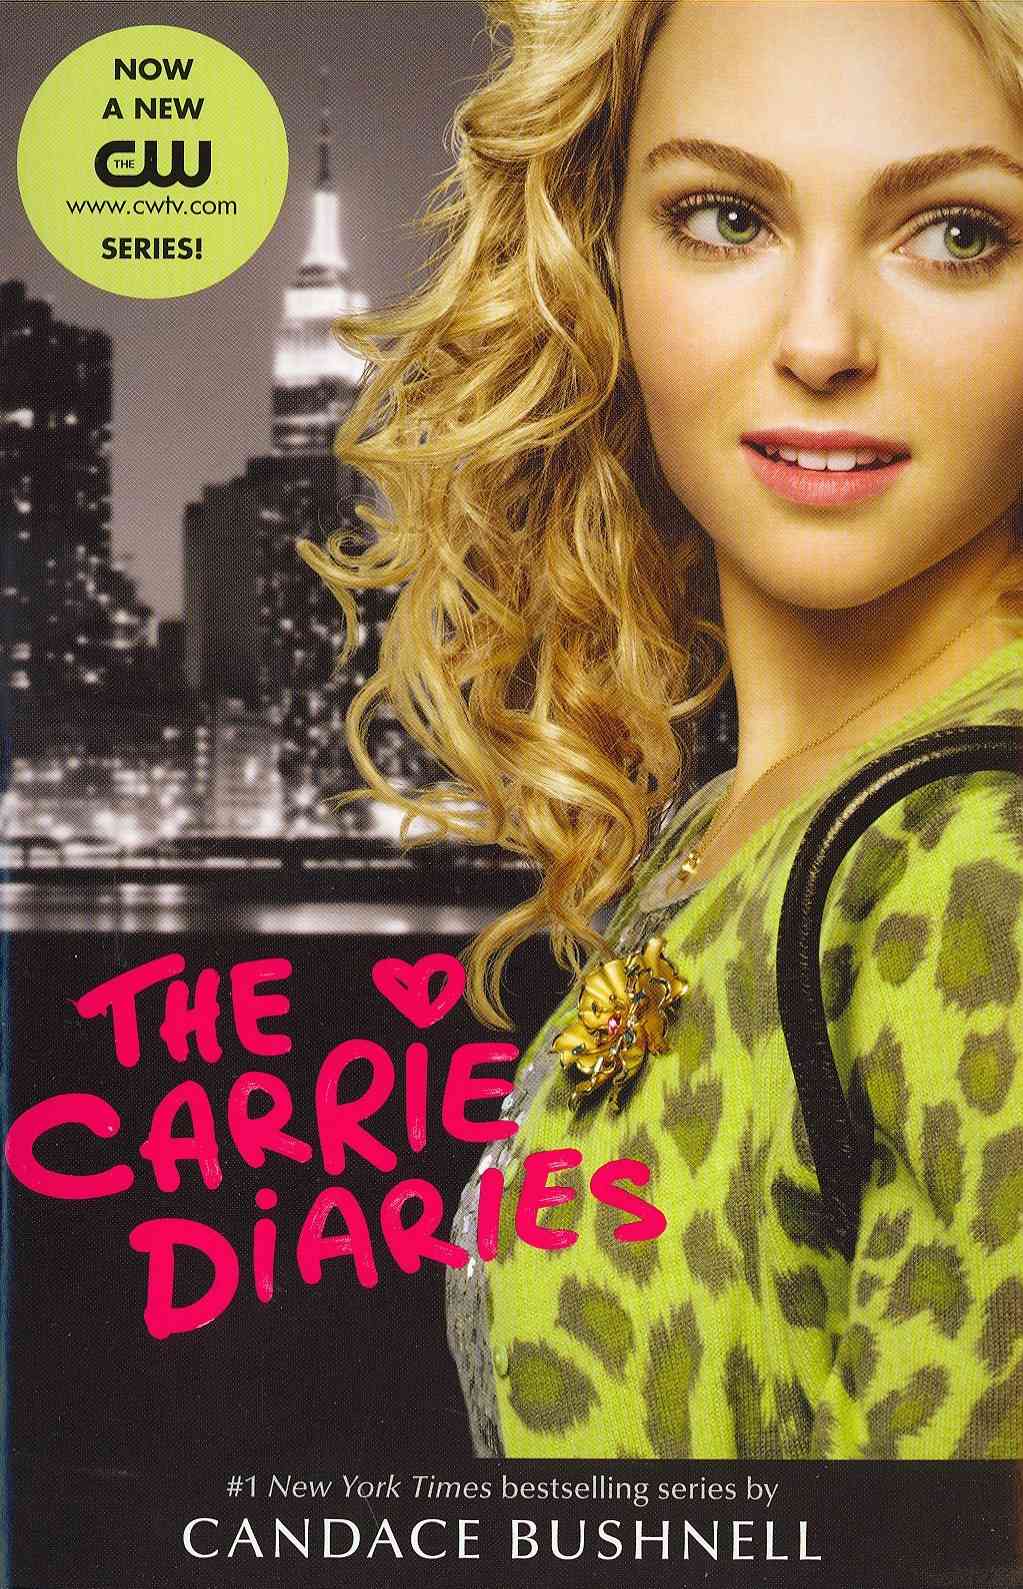 AnnaSophia Robb in The Carrie Diaries